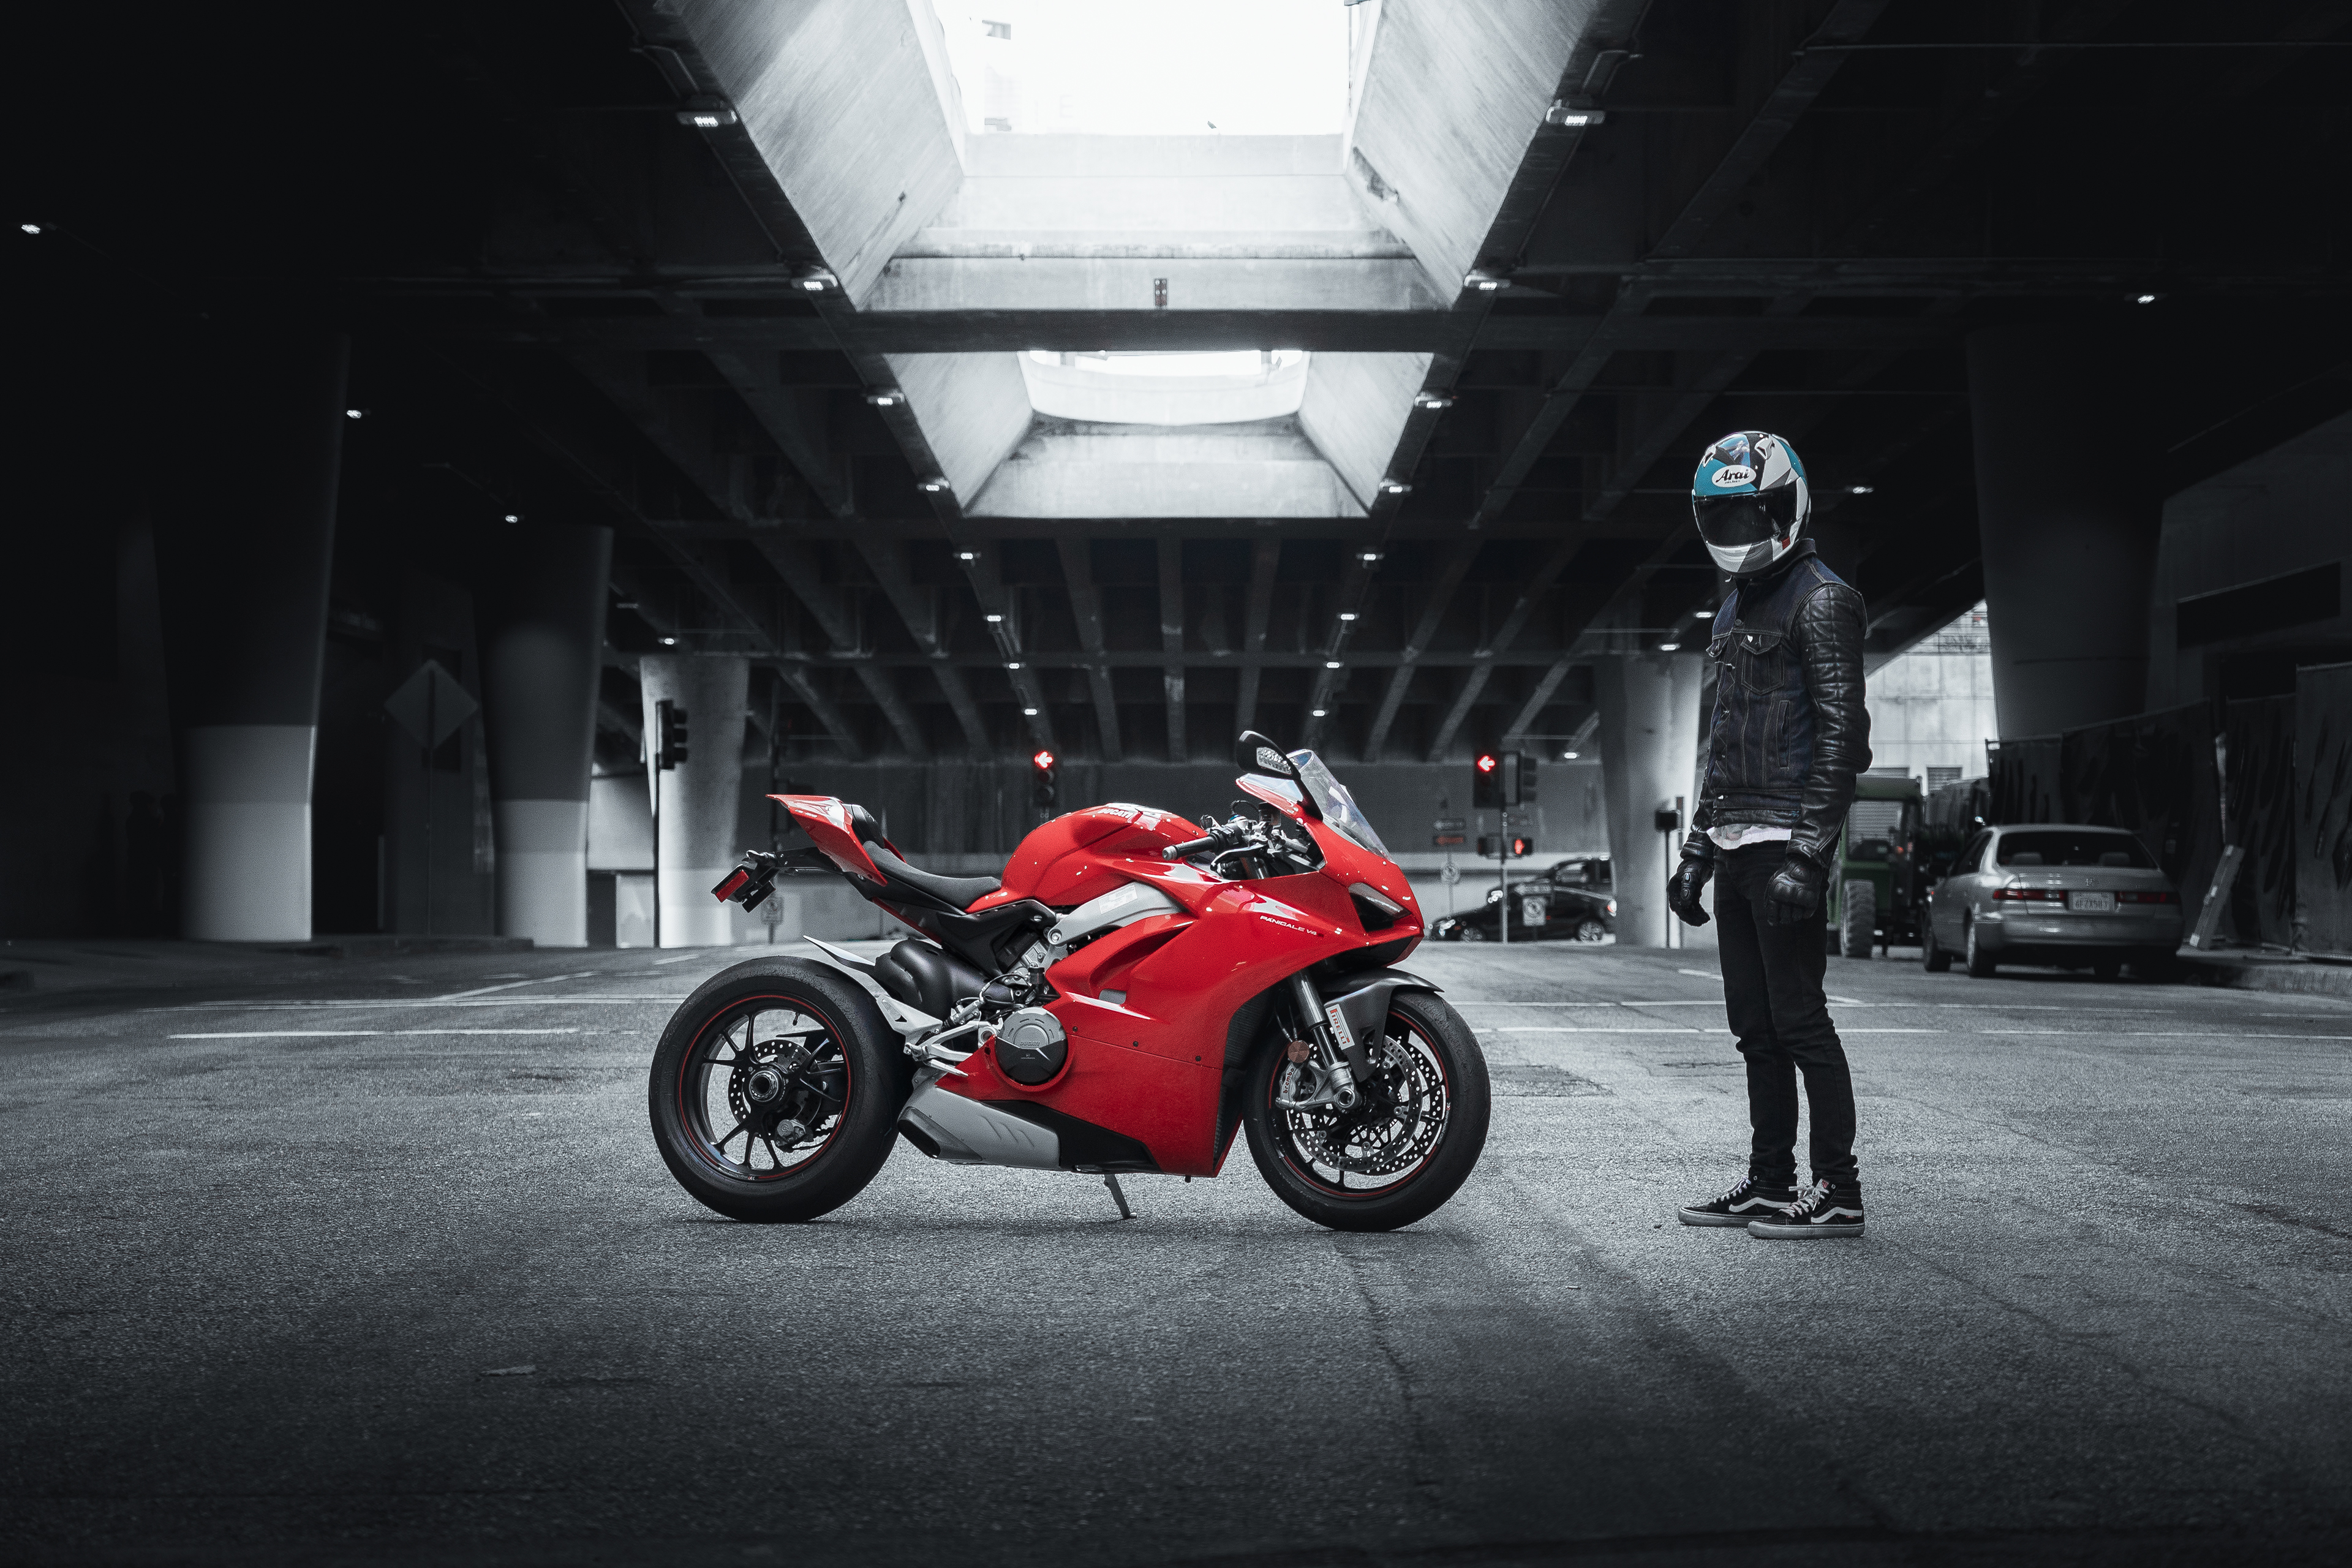 A red Ducati in a monochrome photo